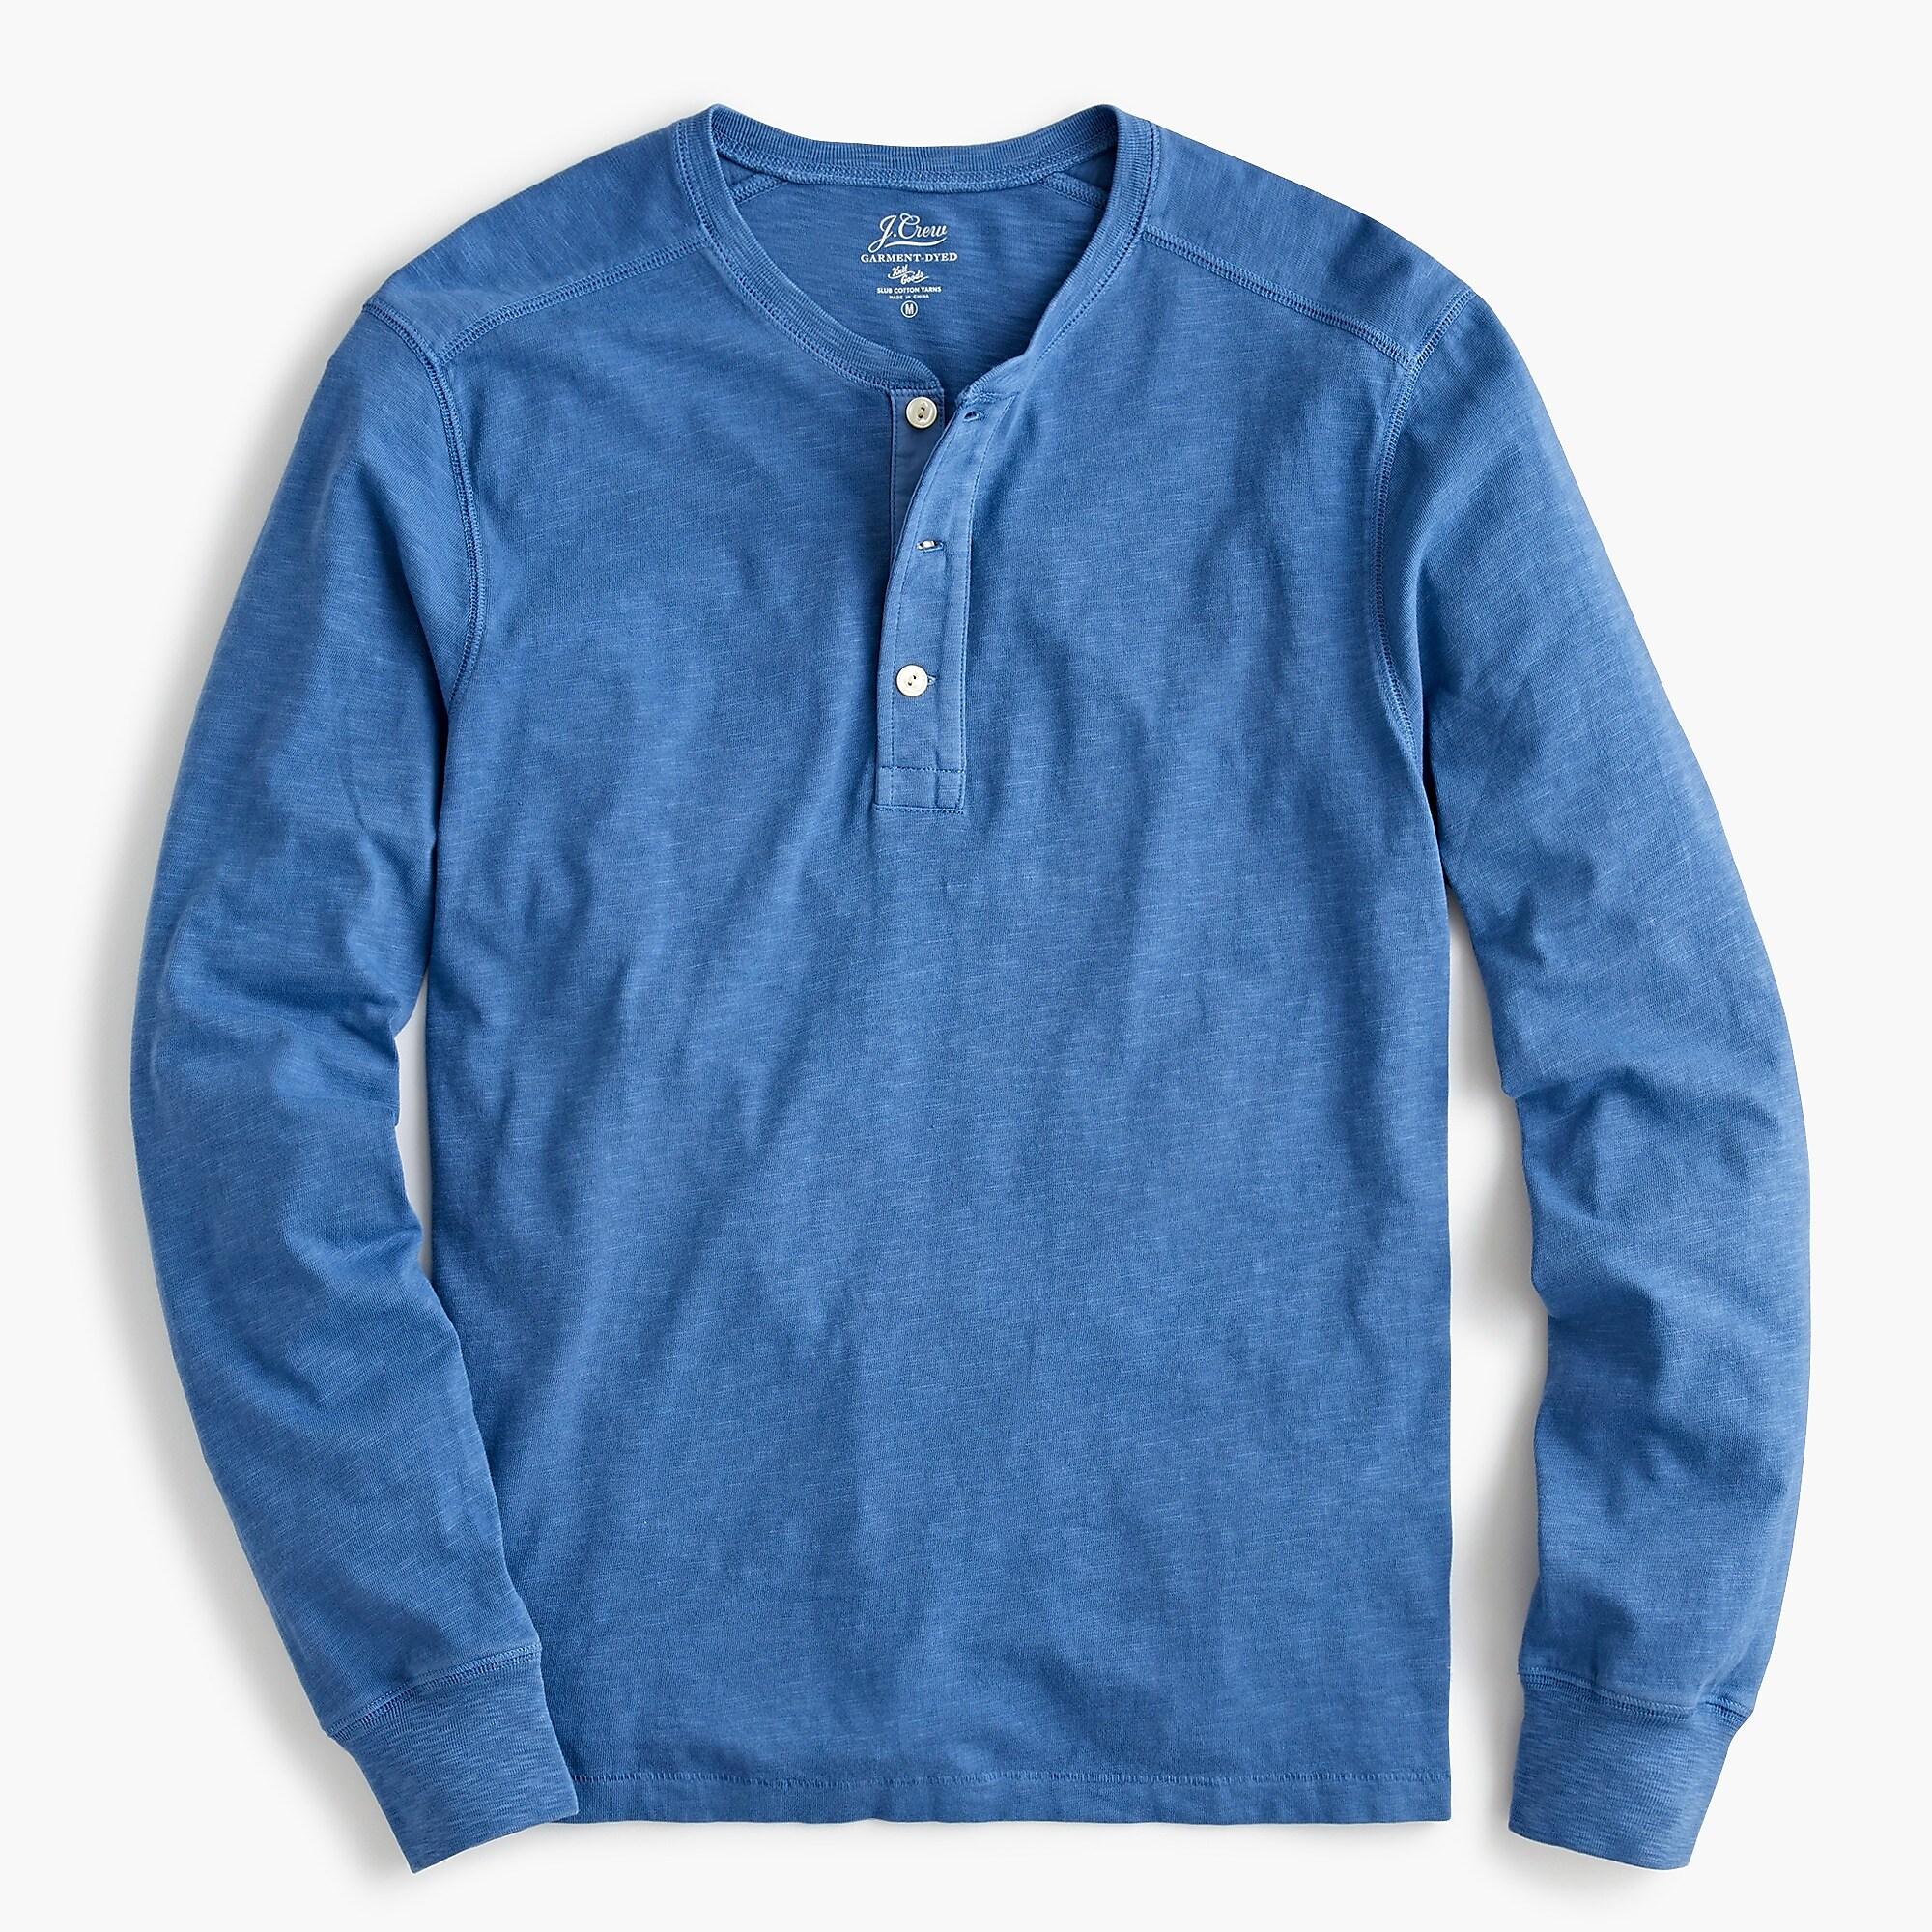 J.Crew Garment-dyed Slub Cotton Henley in Blue for Men - Lyst